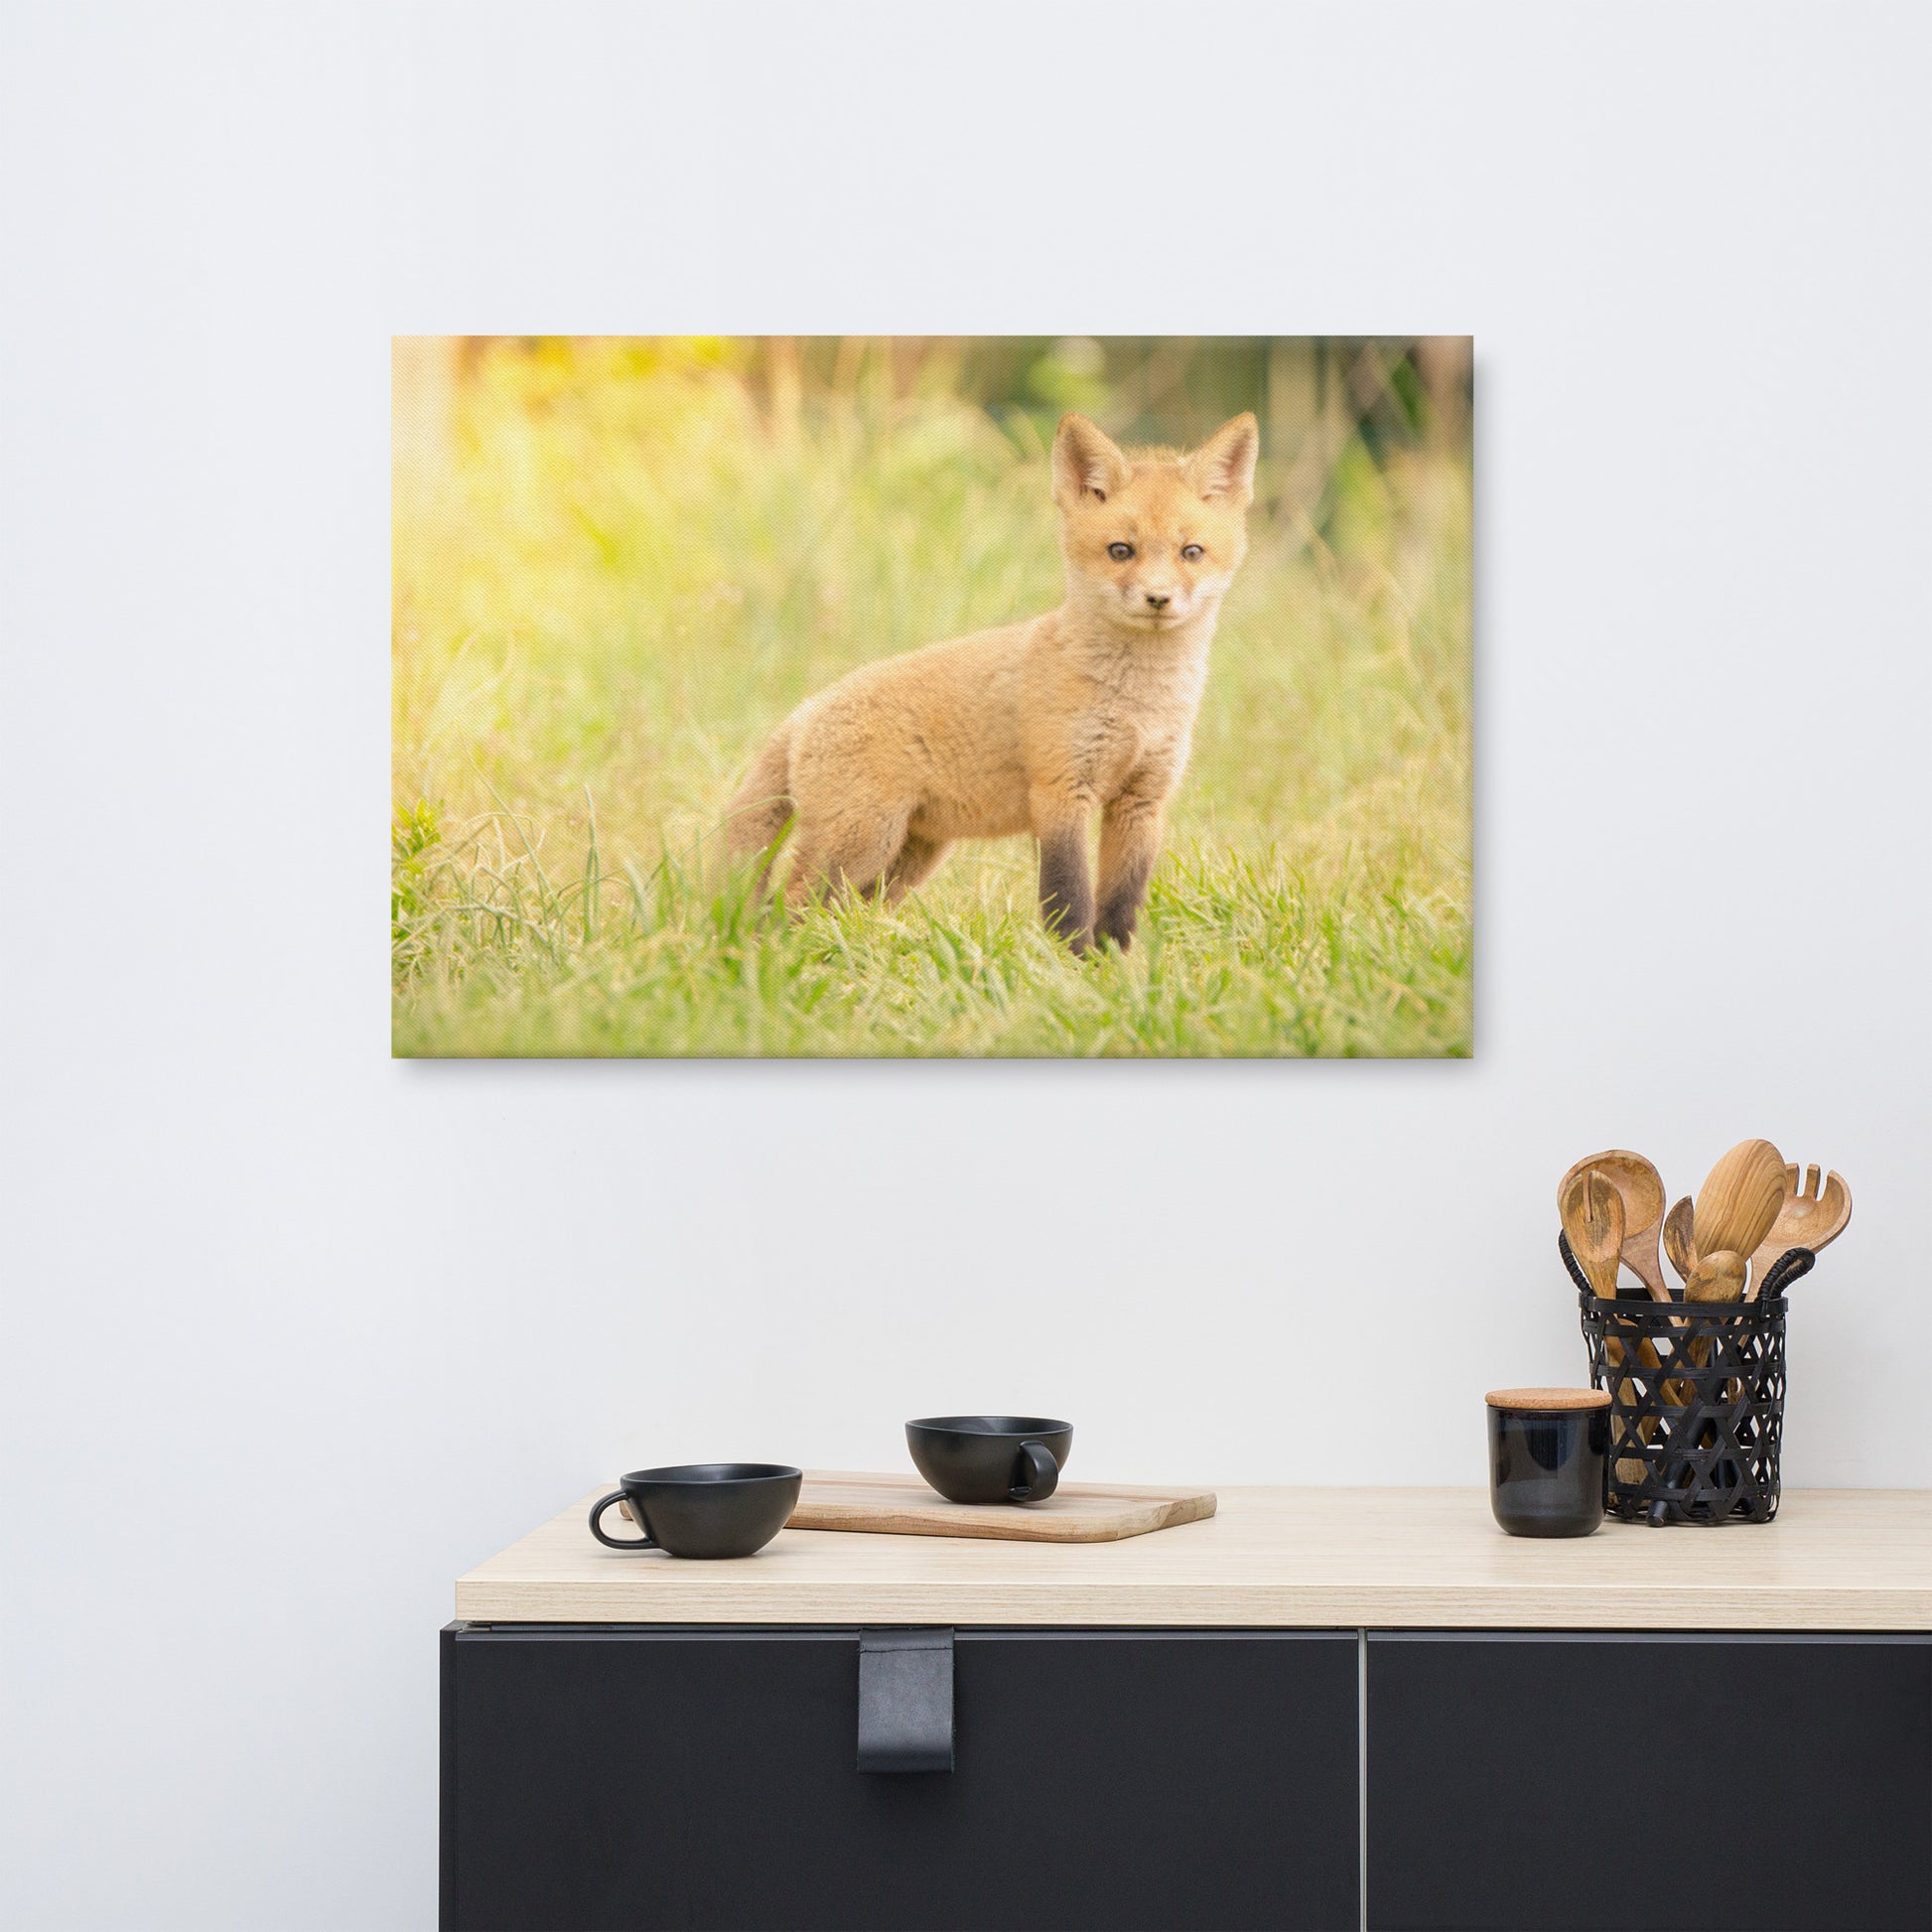 Nursery Canvas Wall Art: Baby Red Fox in the Sun Animal / Wildlife / Nature Photograph Canvas Wall Art Print - Artwork